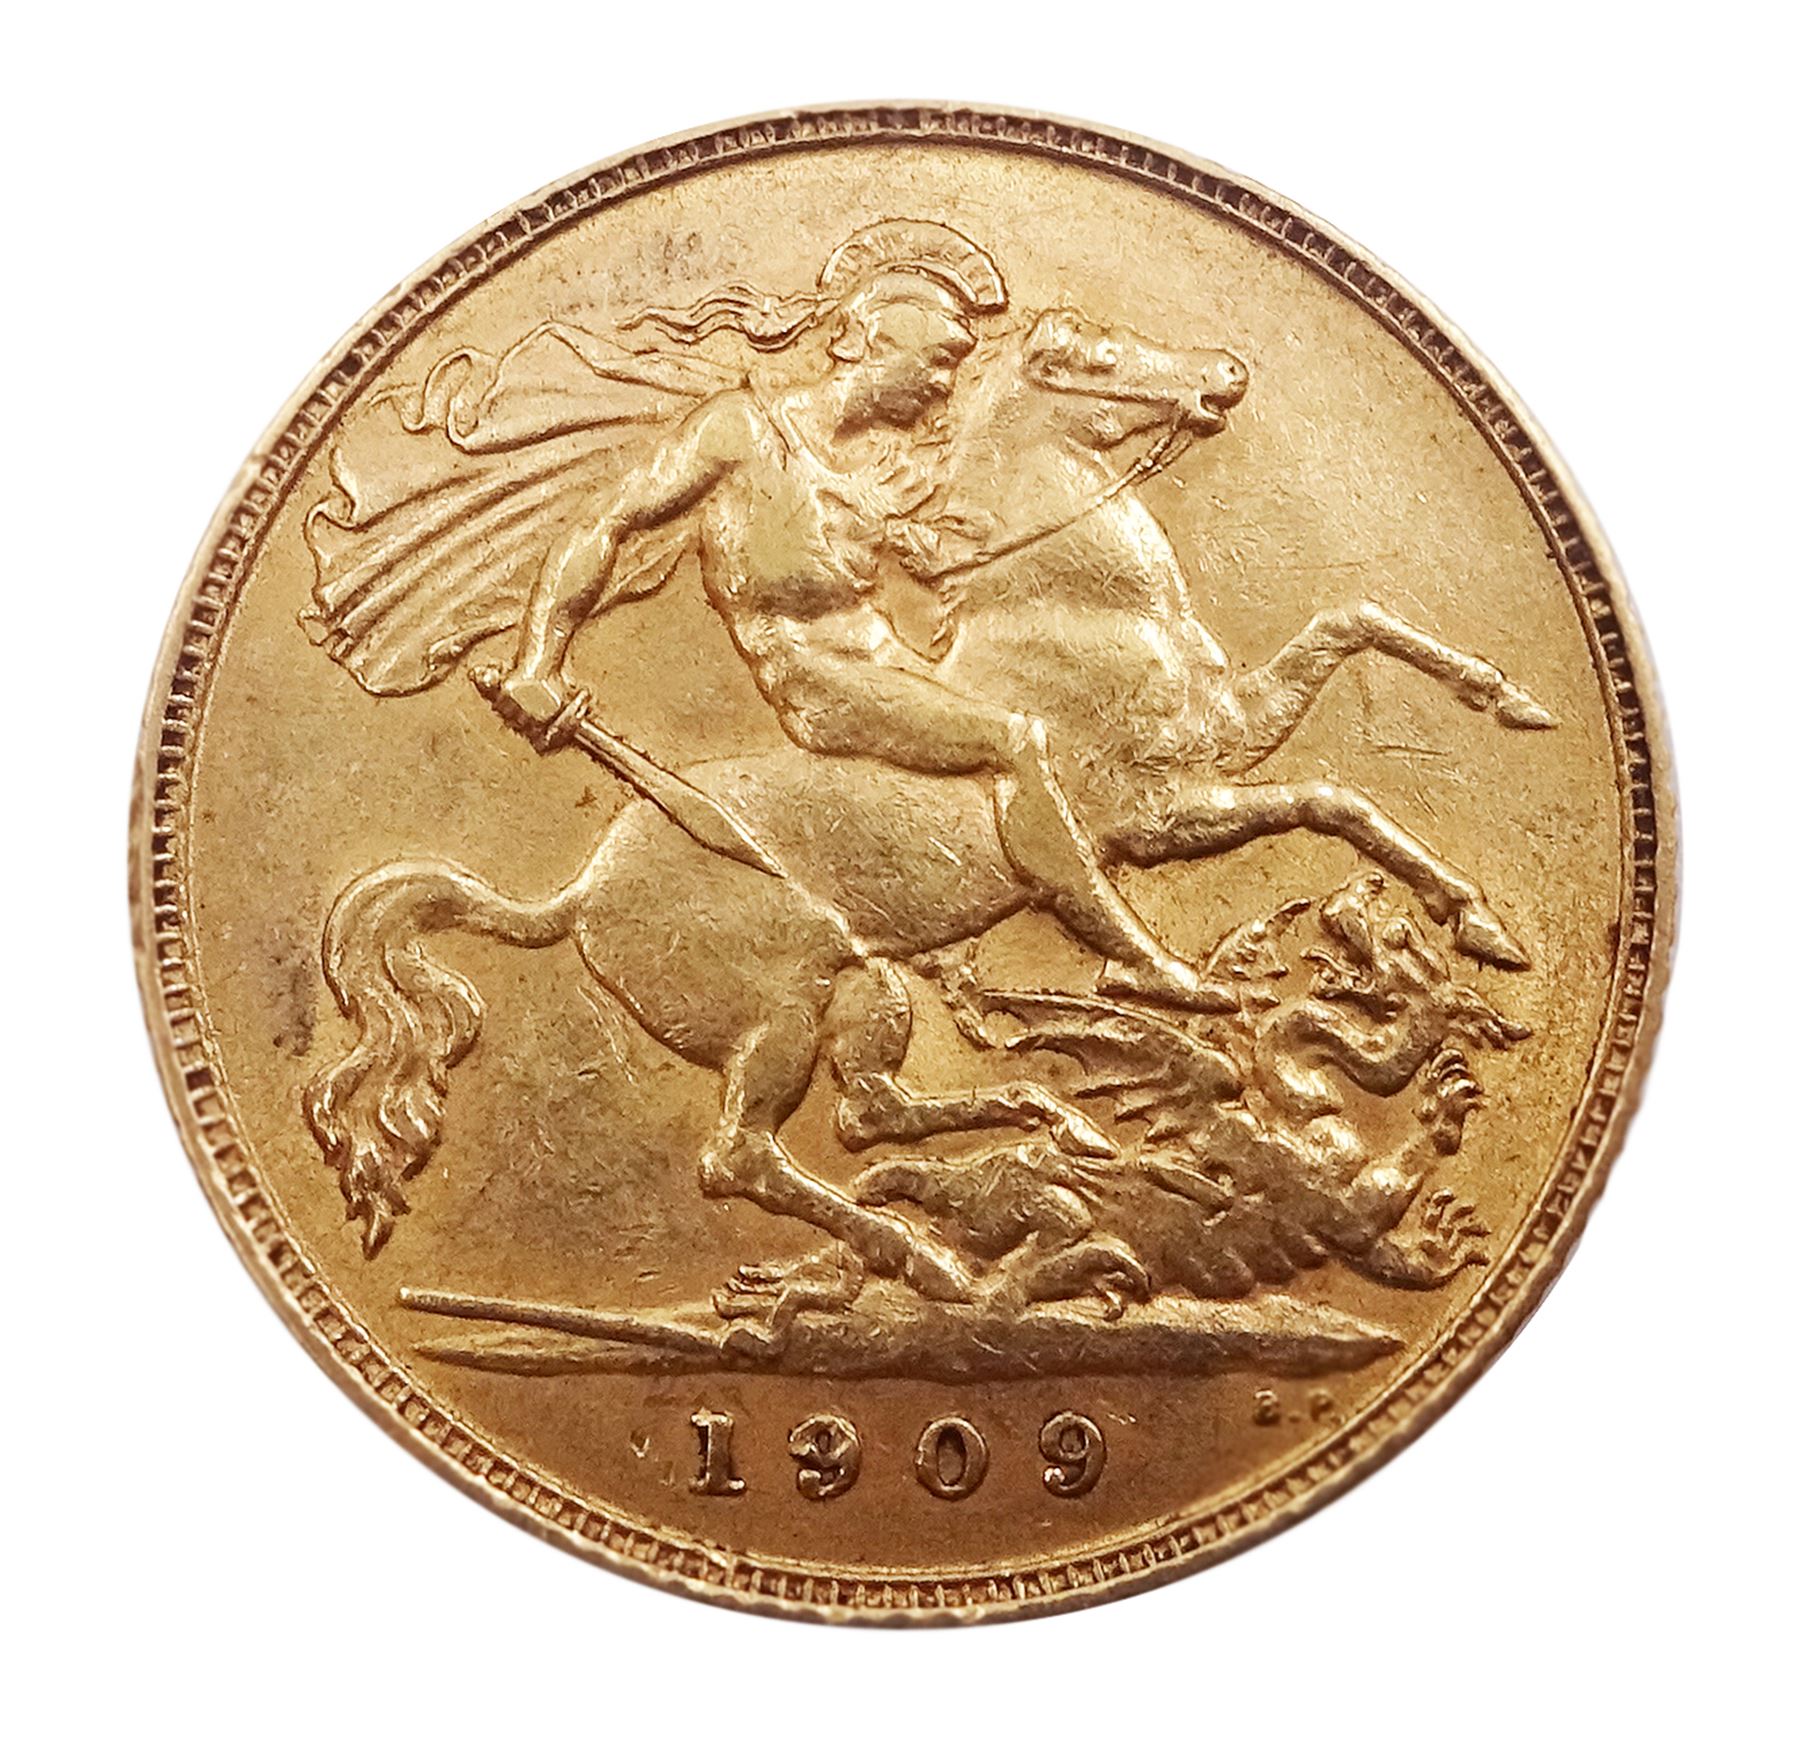 King Edward VII 1909 gold half sovereign coin - Image 2 of 2